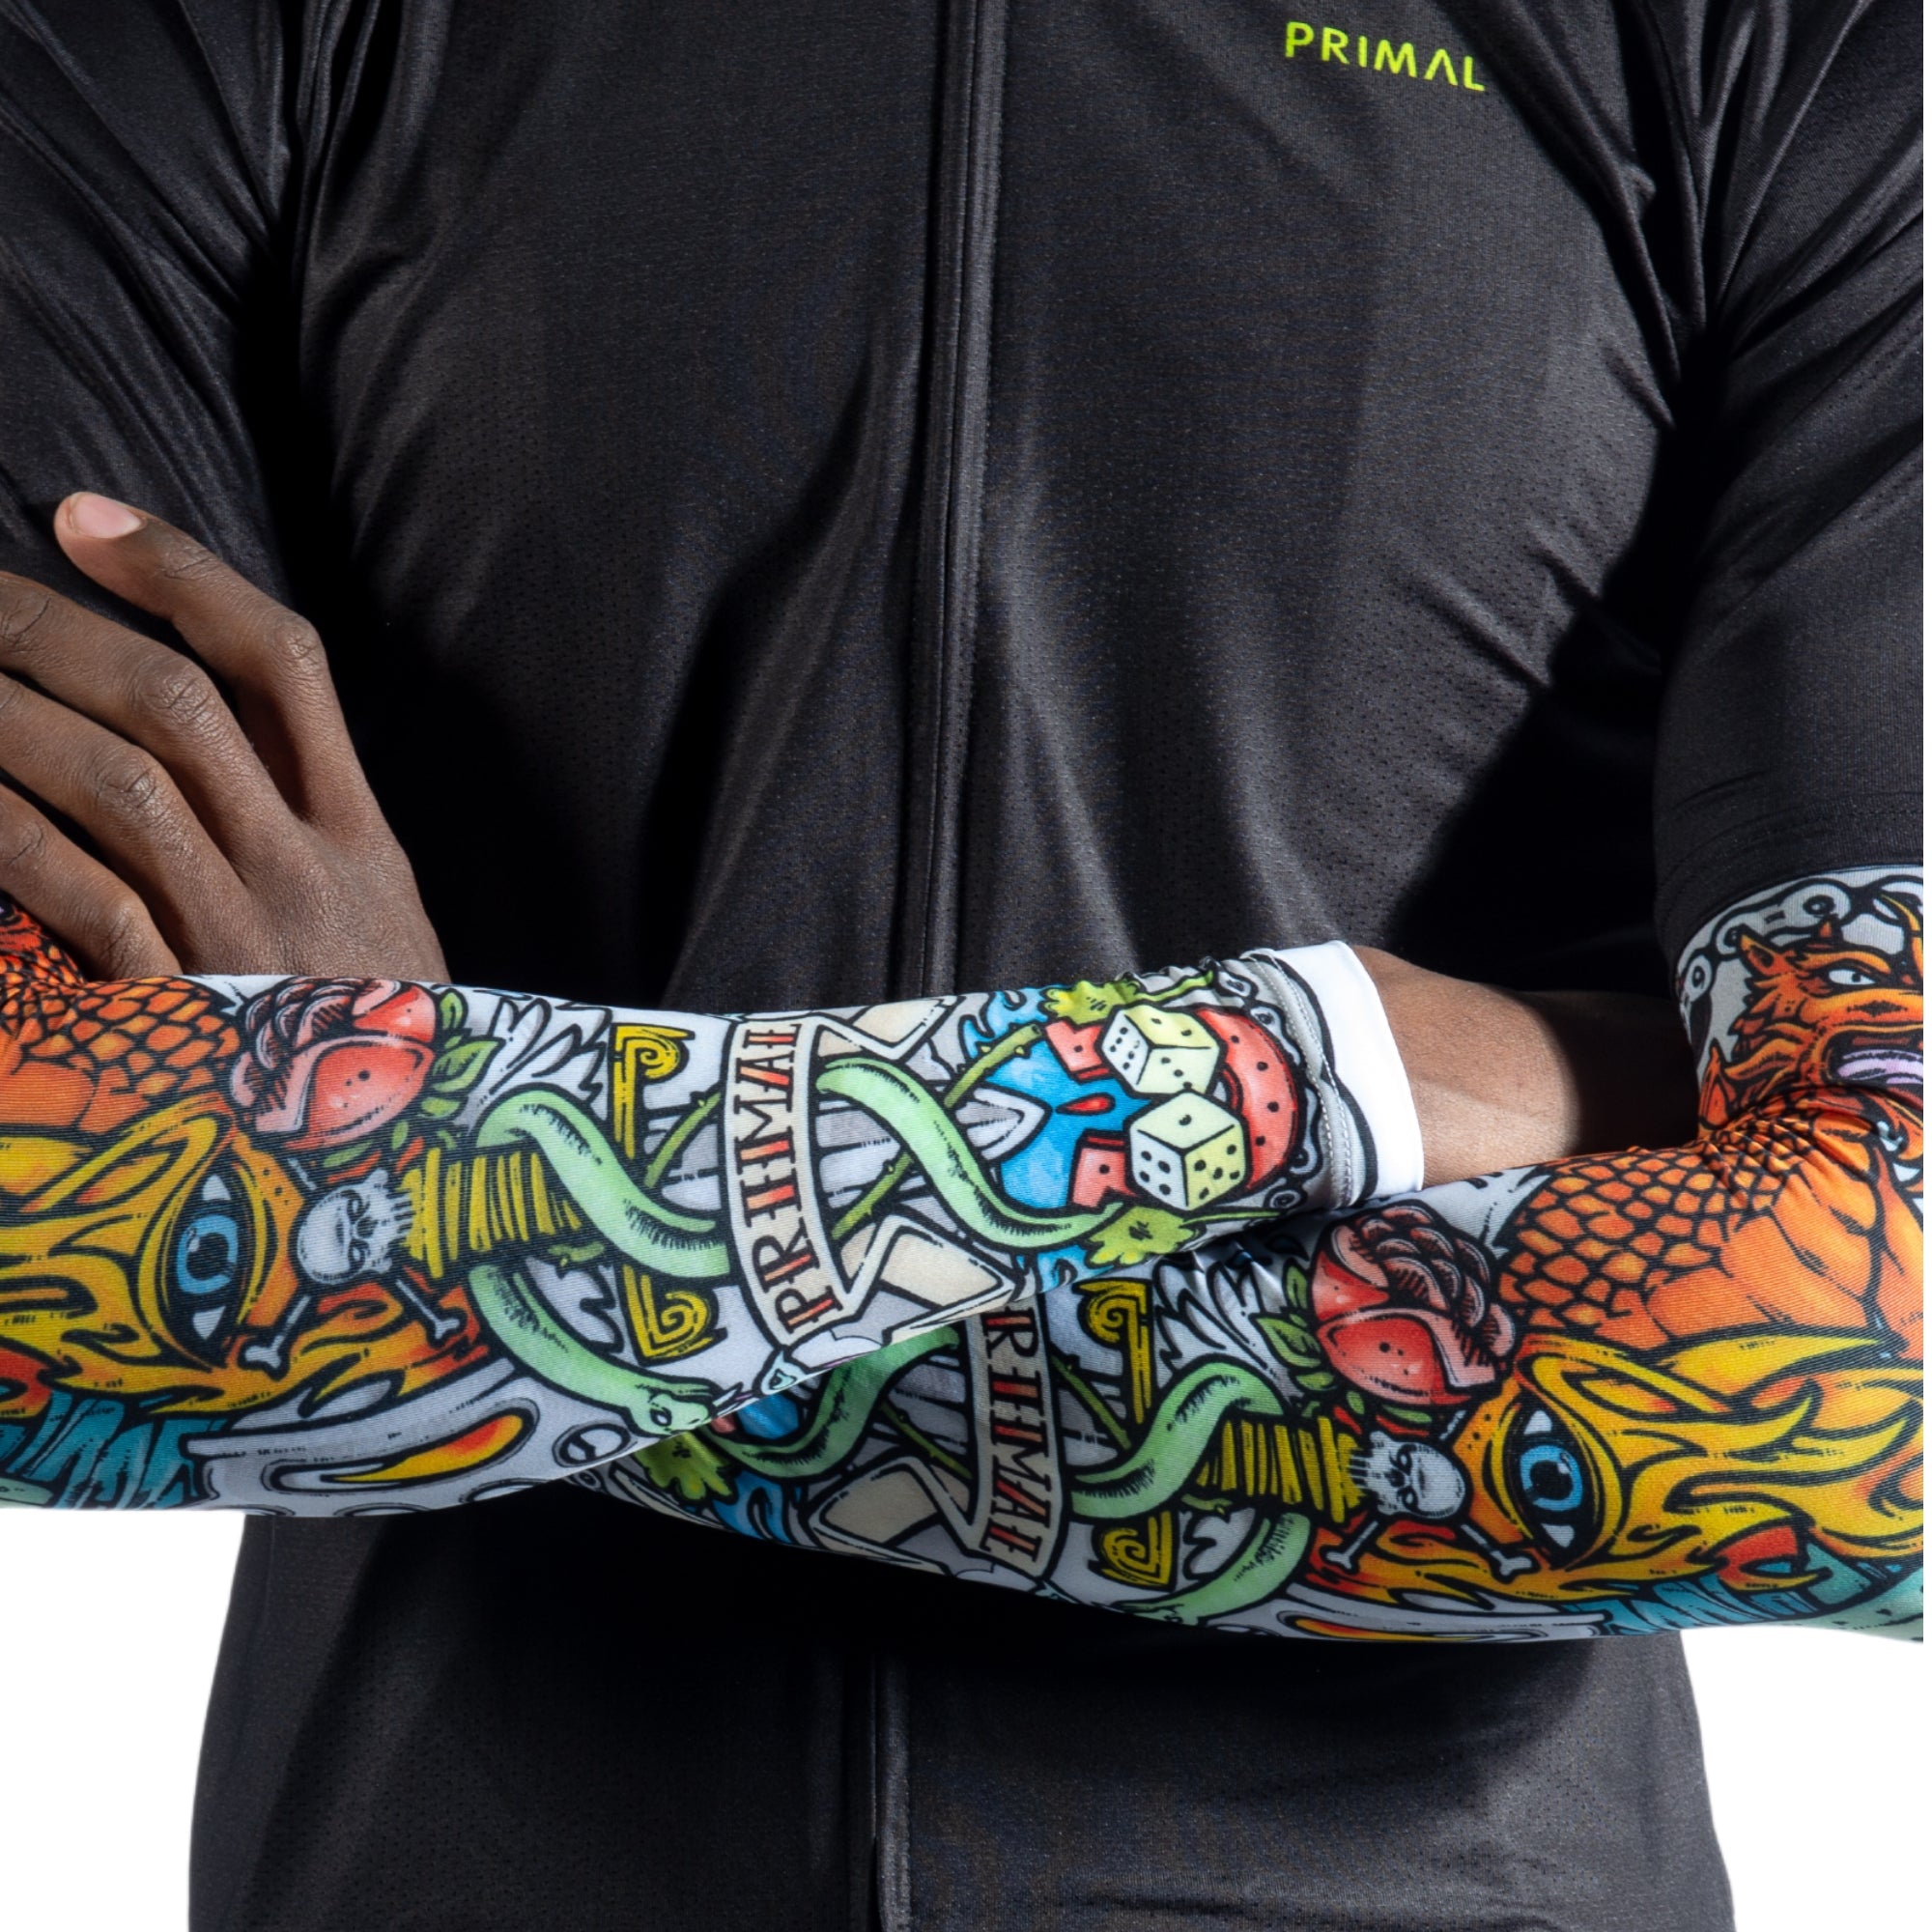 forearm sleeve tattoos ideas